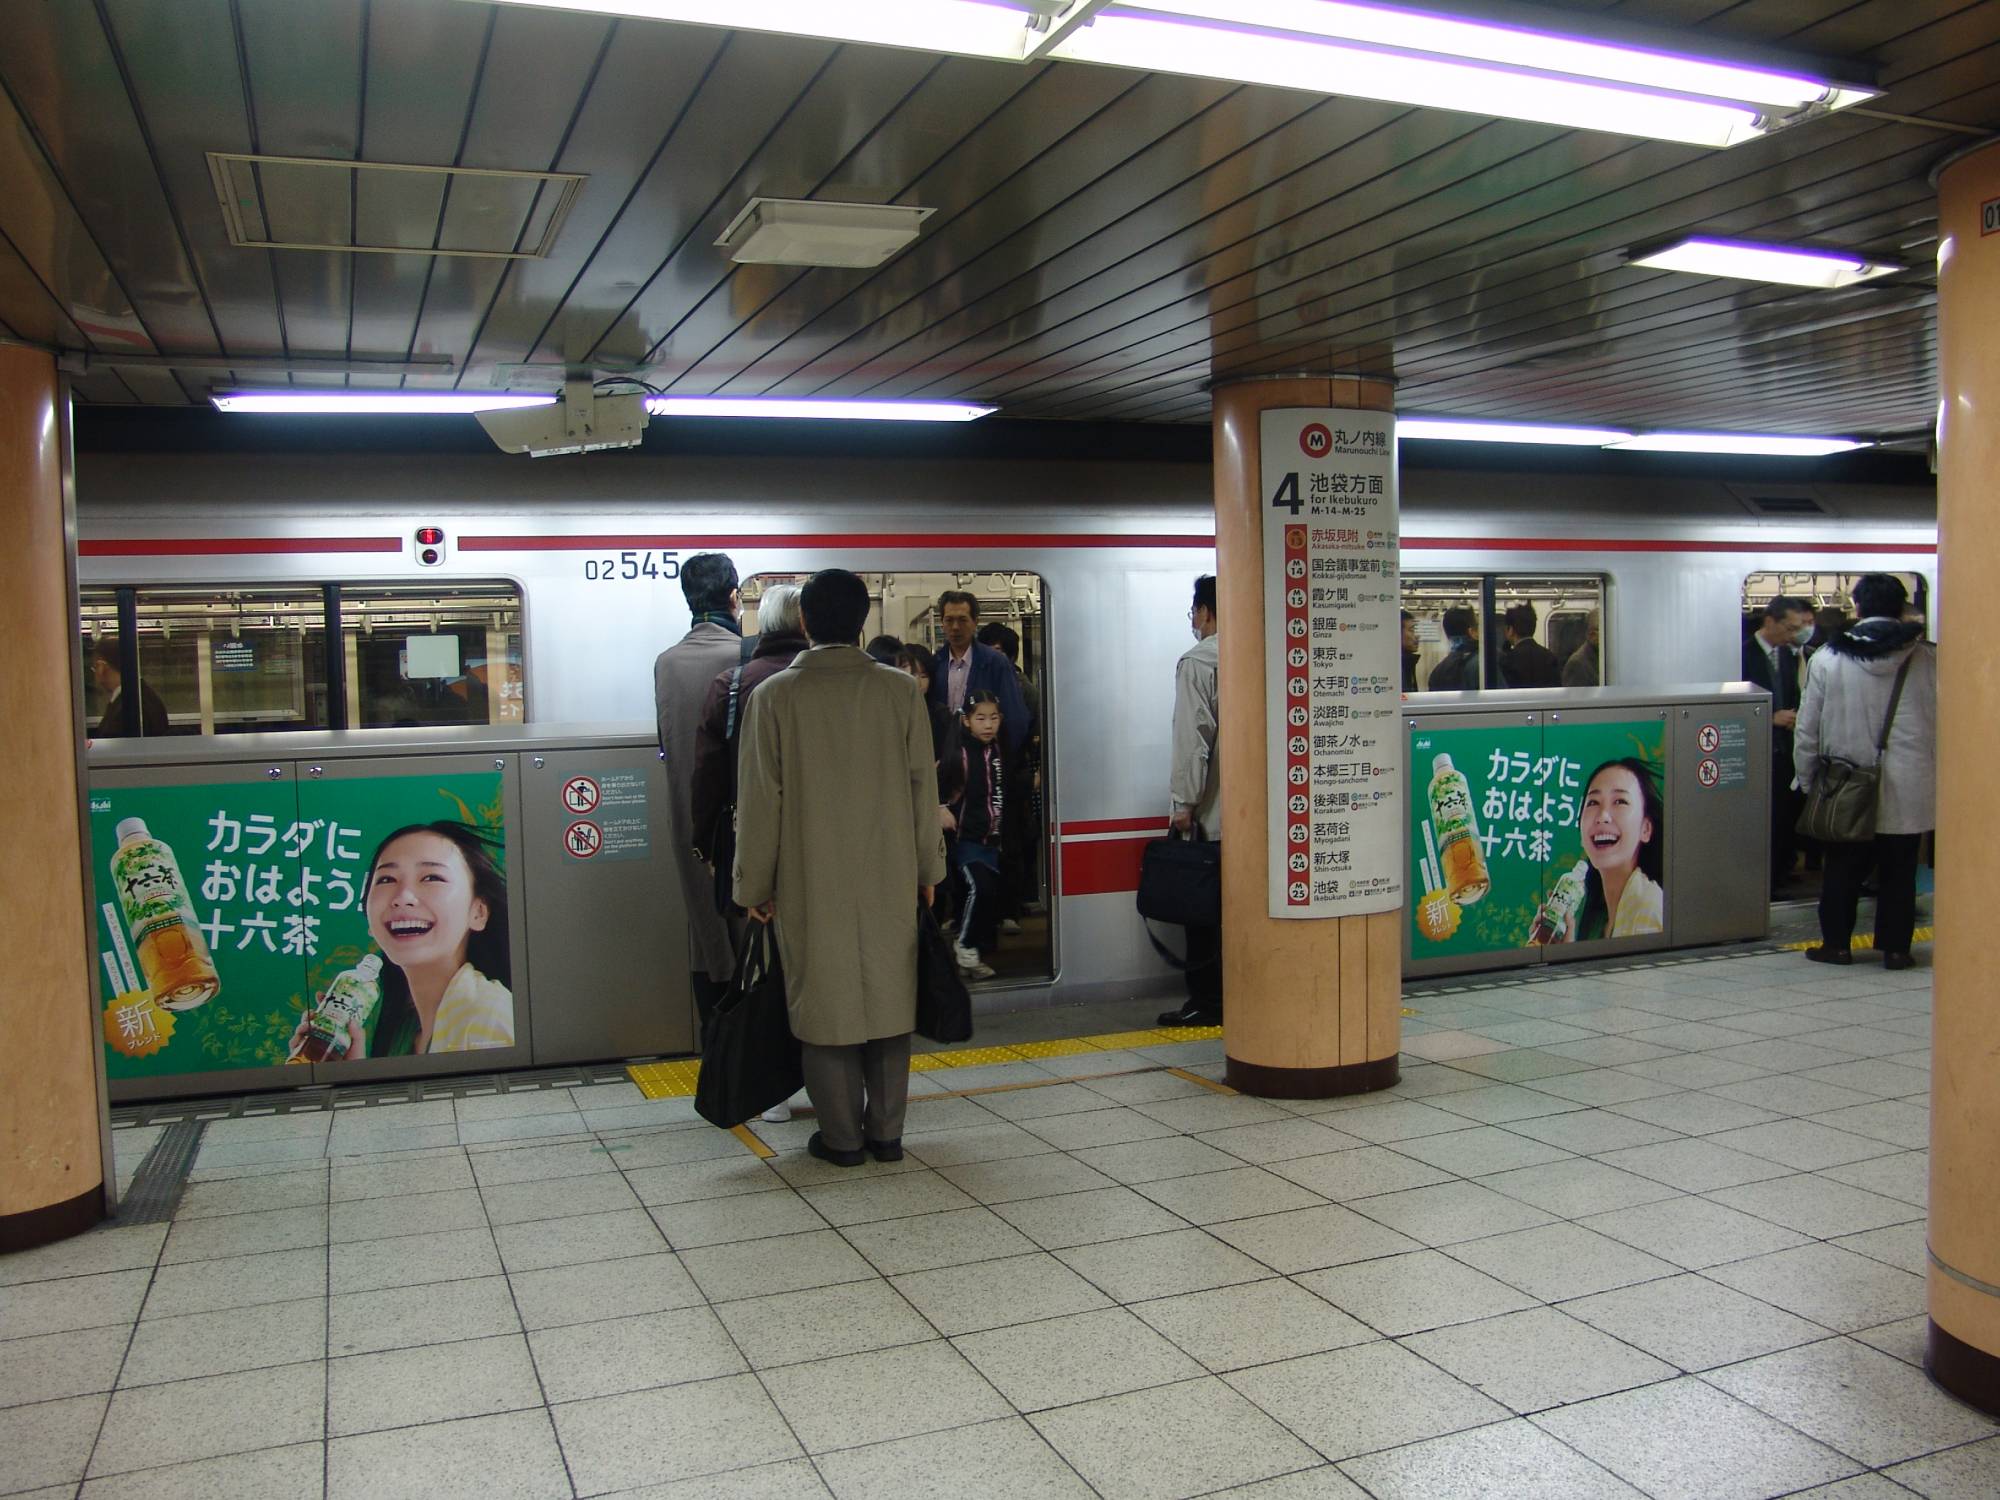 Japan - Tokyo subway